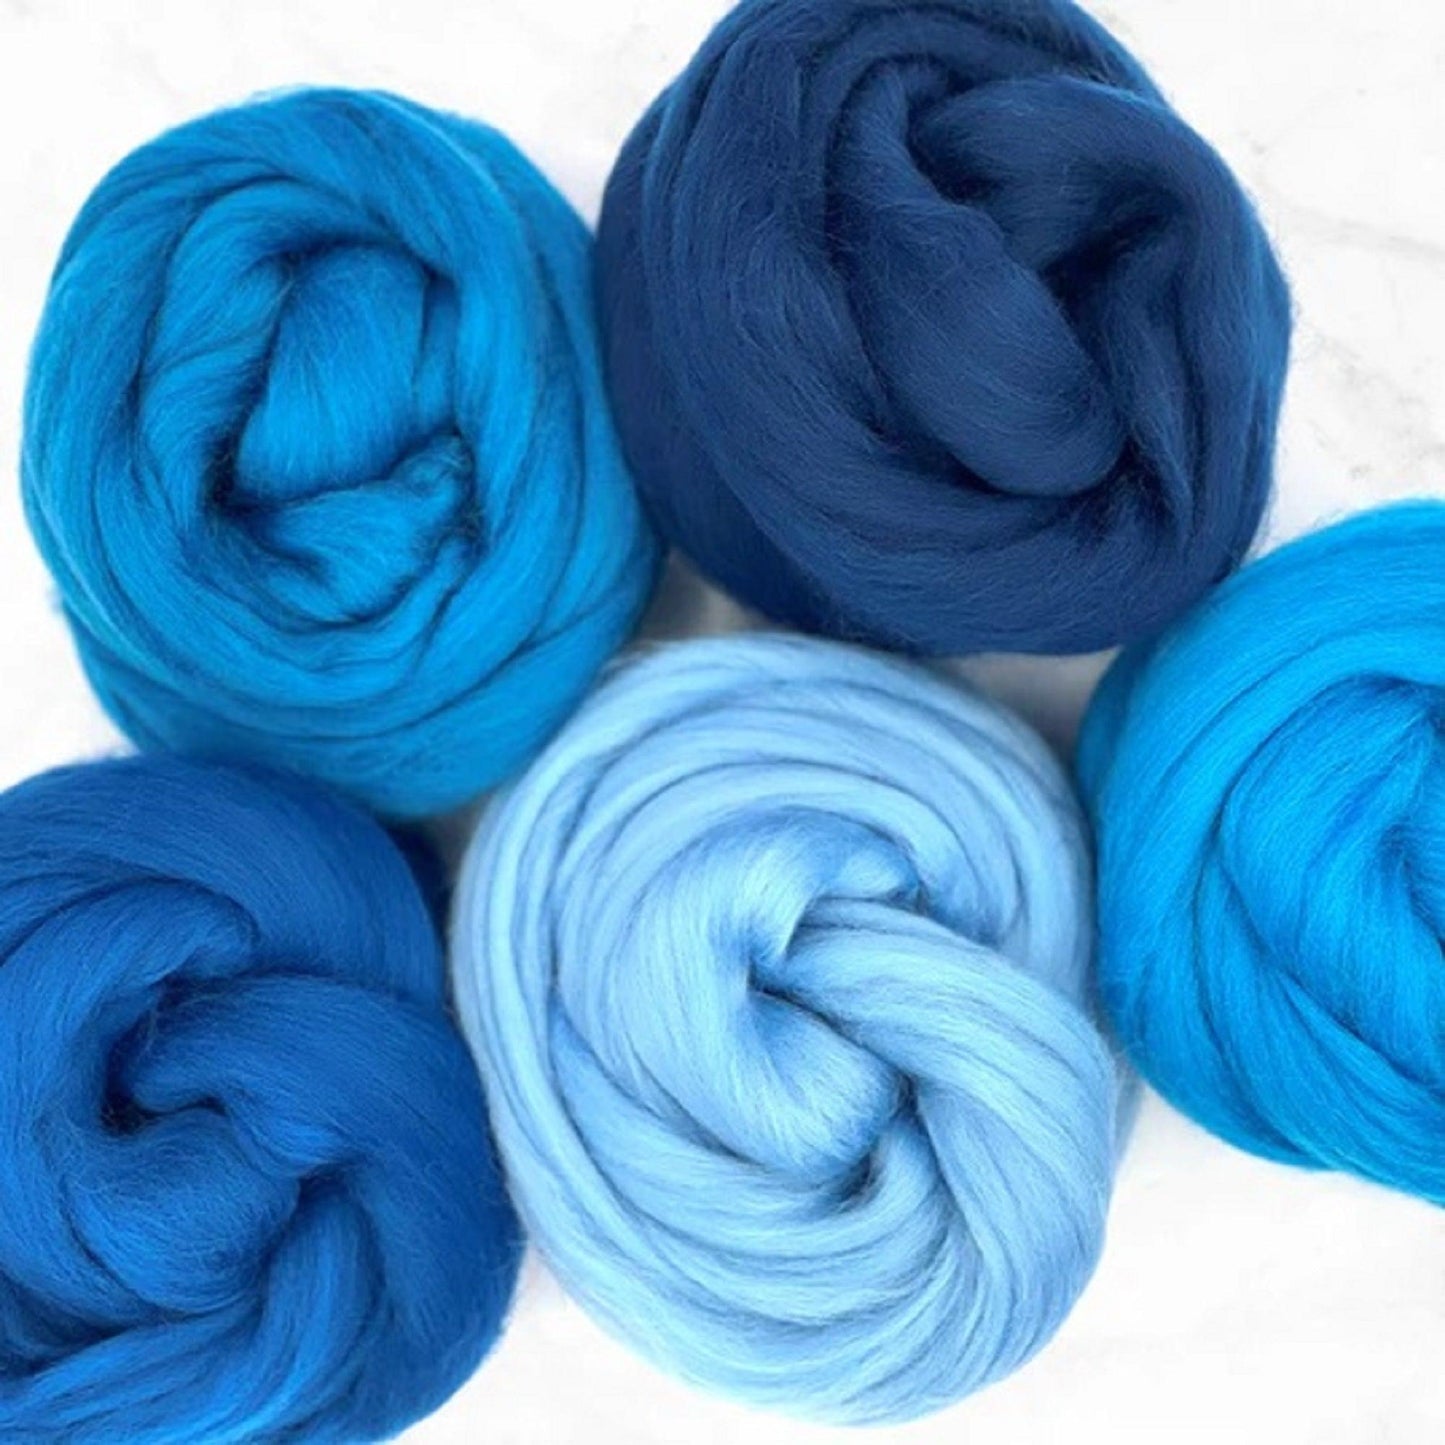 Mixed Merino Wool Variety Pack | Delta Blues (Blues) 250 Grams, 23 Micron